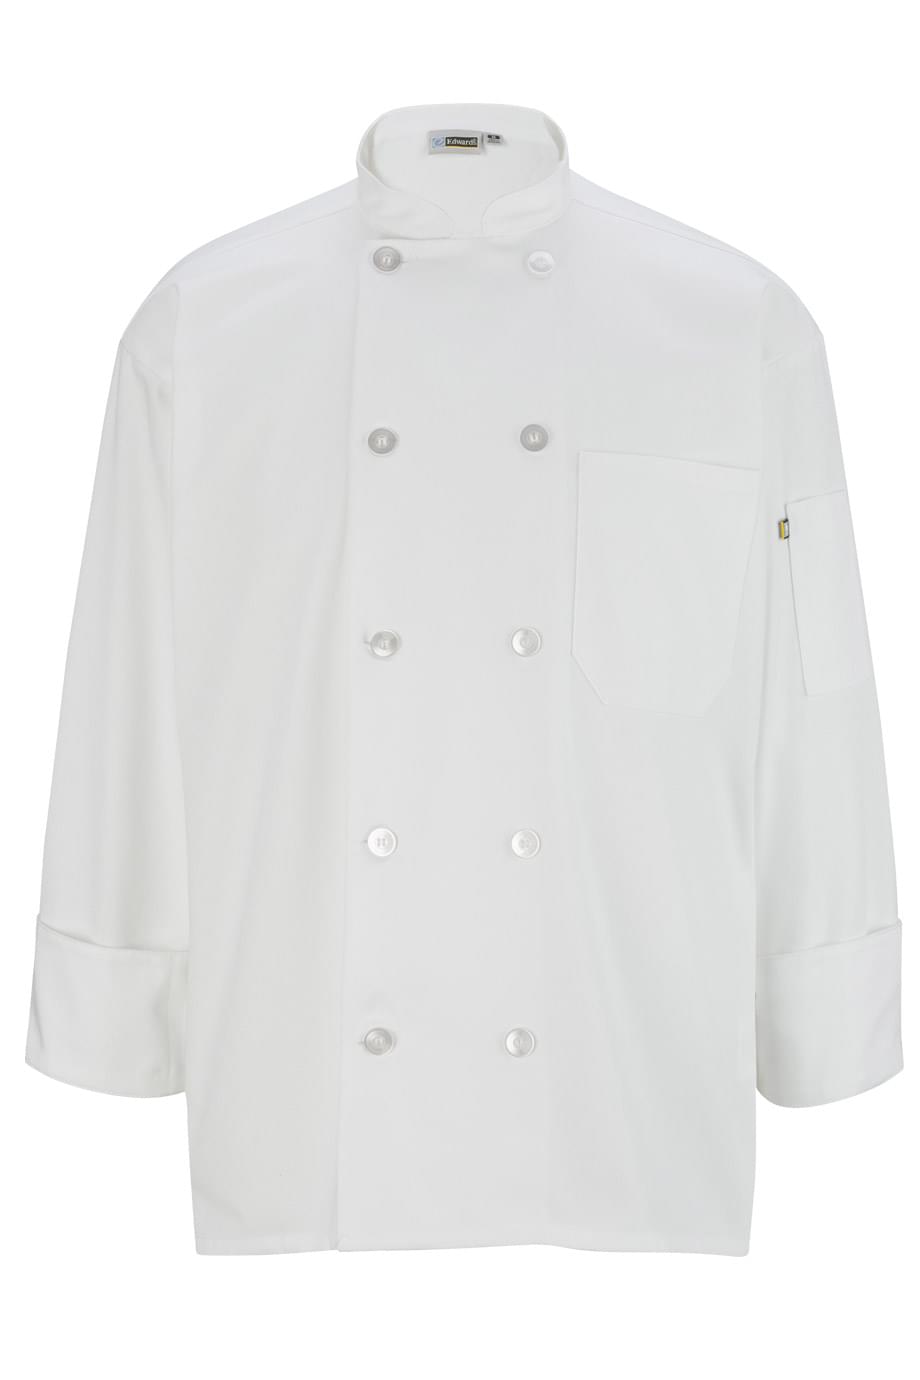 Edwards Garment 3301 - 10 Pearl Button Chef Coat